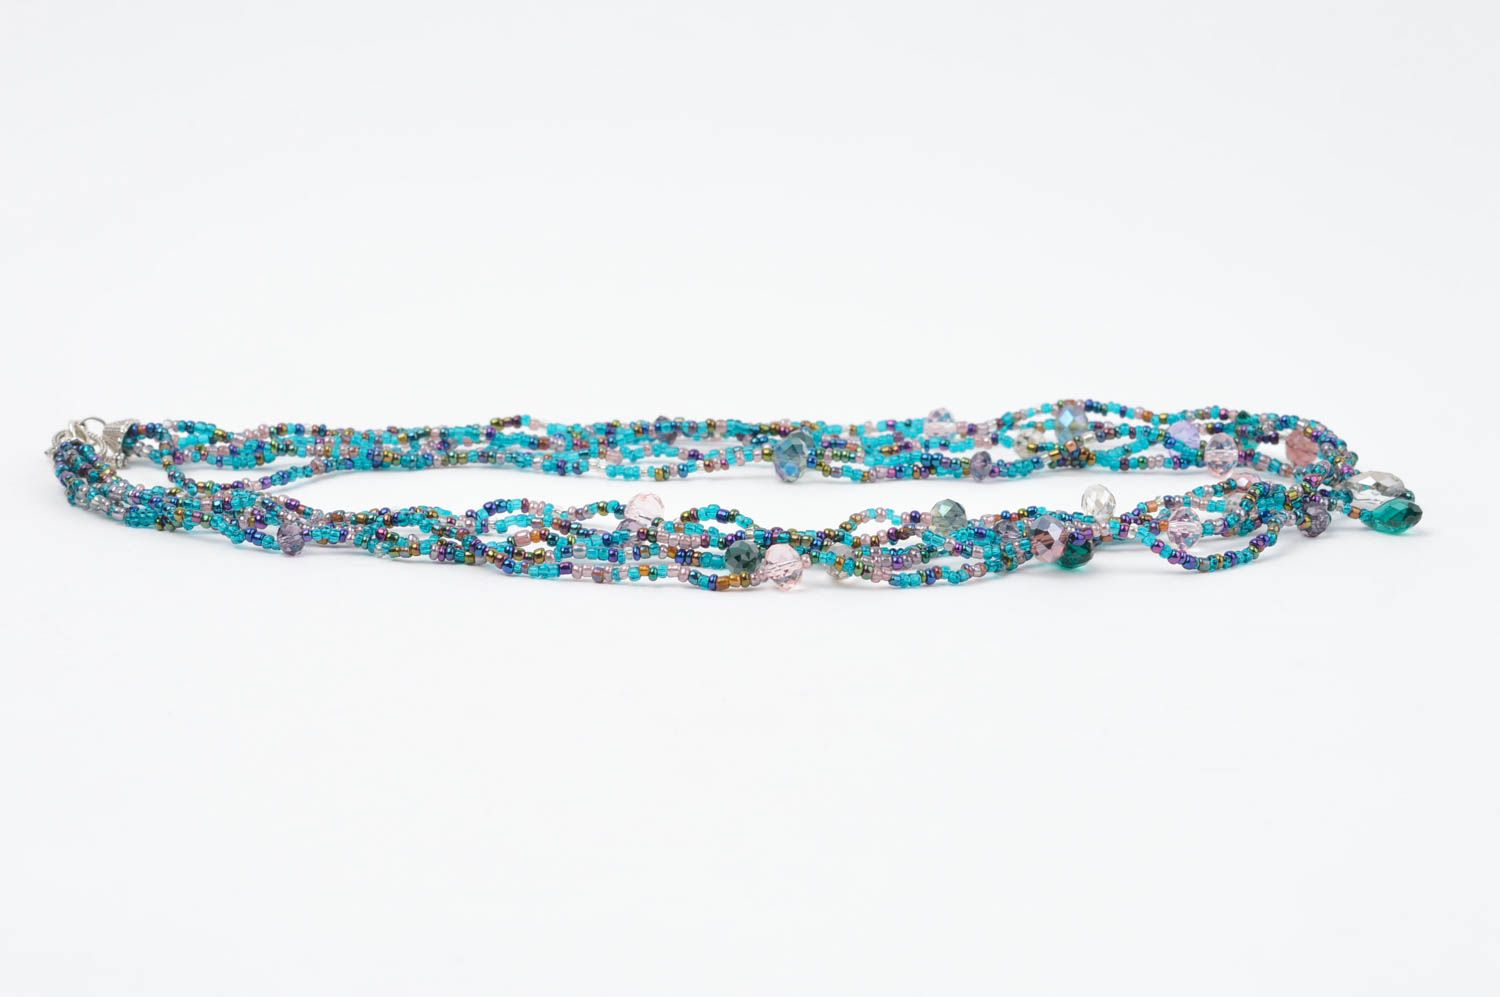 Handmade necklace designer accessory unusual jewelry gift ideas elite jewelry photo 2